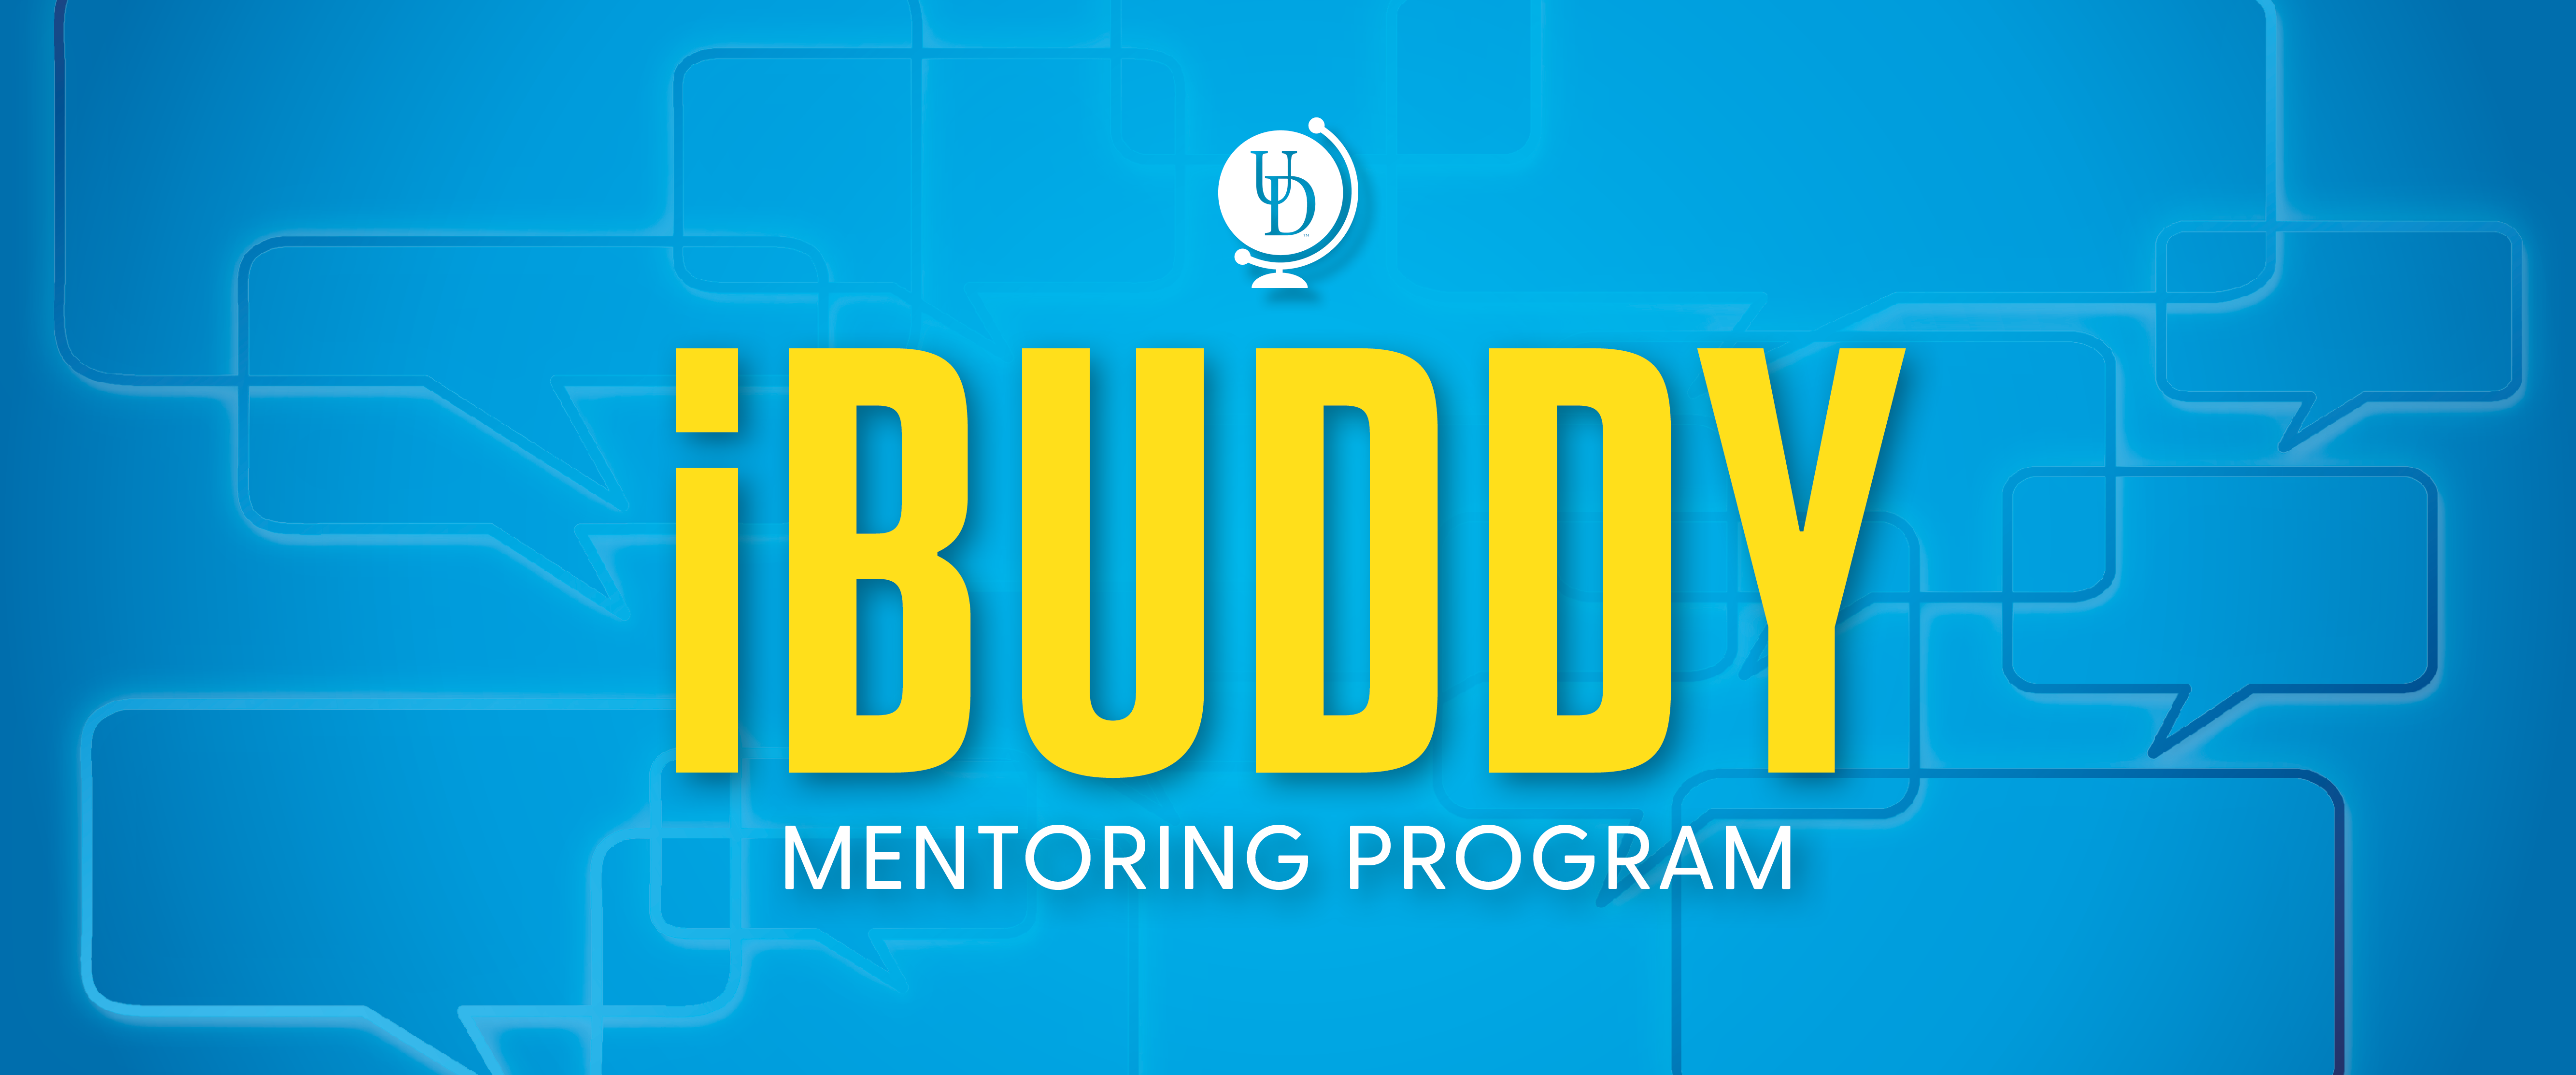 iBuddy Mentoring program